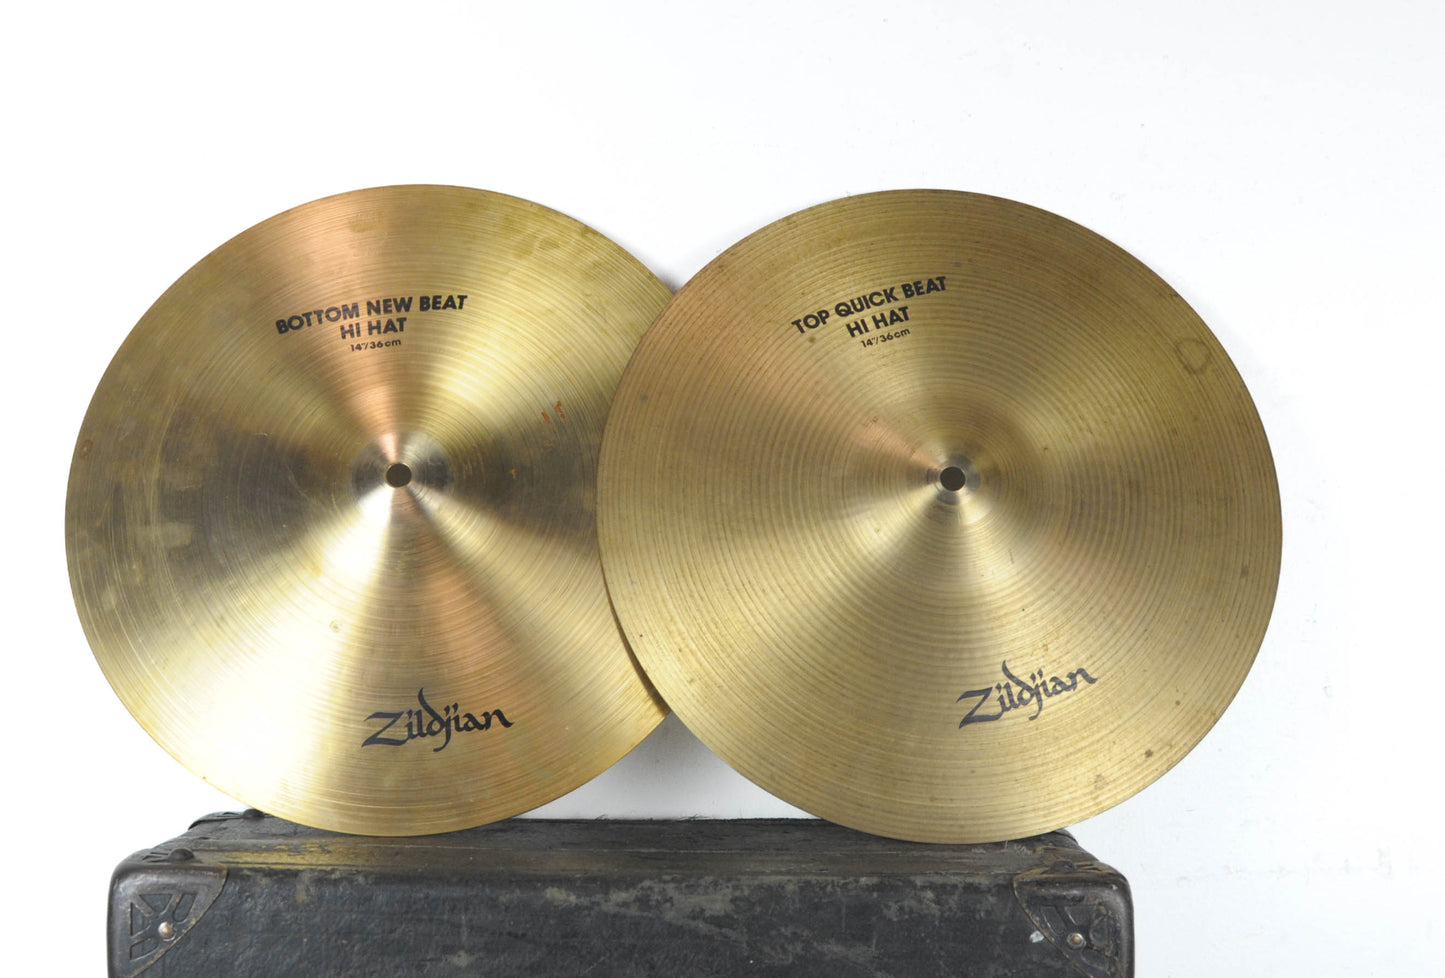 1980s Zildjian 14" Quick Beat / New Beat Hi Hat Cymbals 1152g 1435g